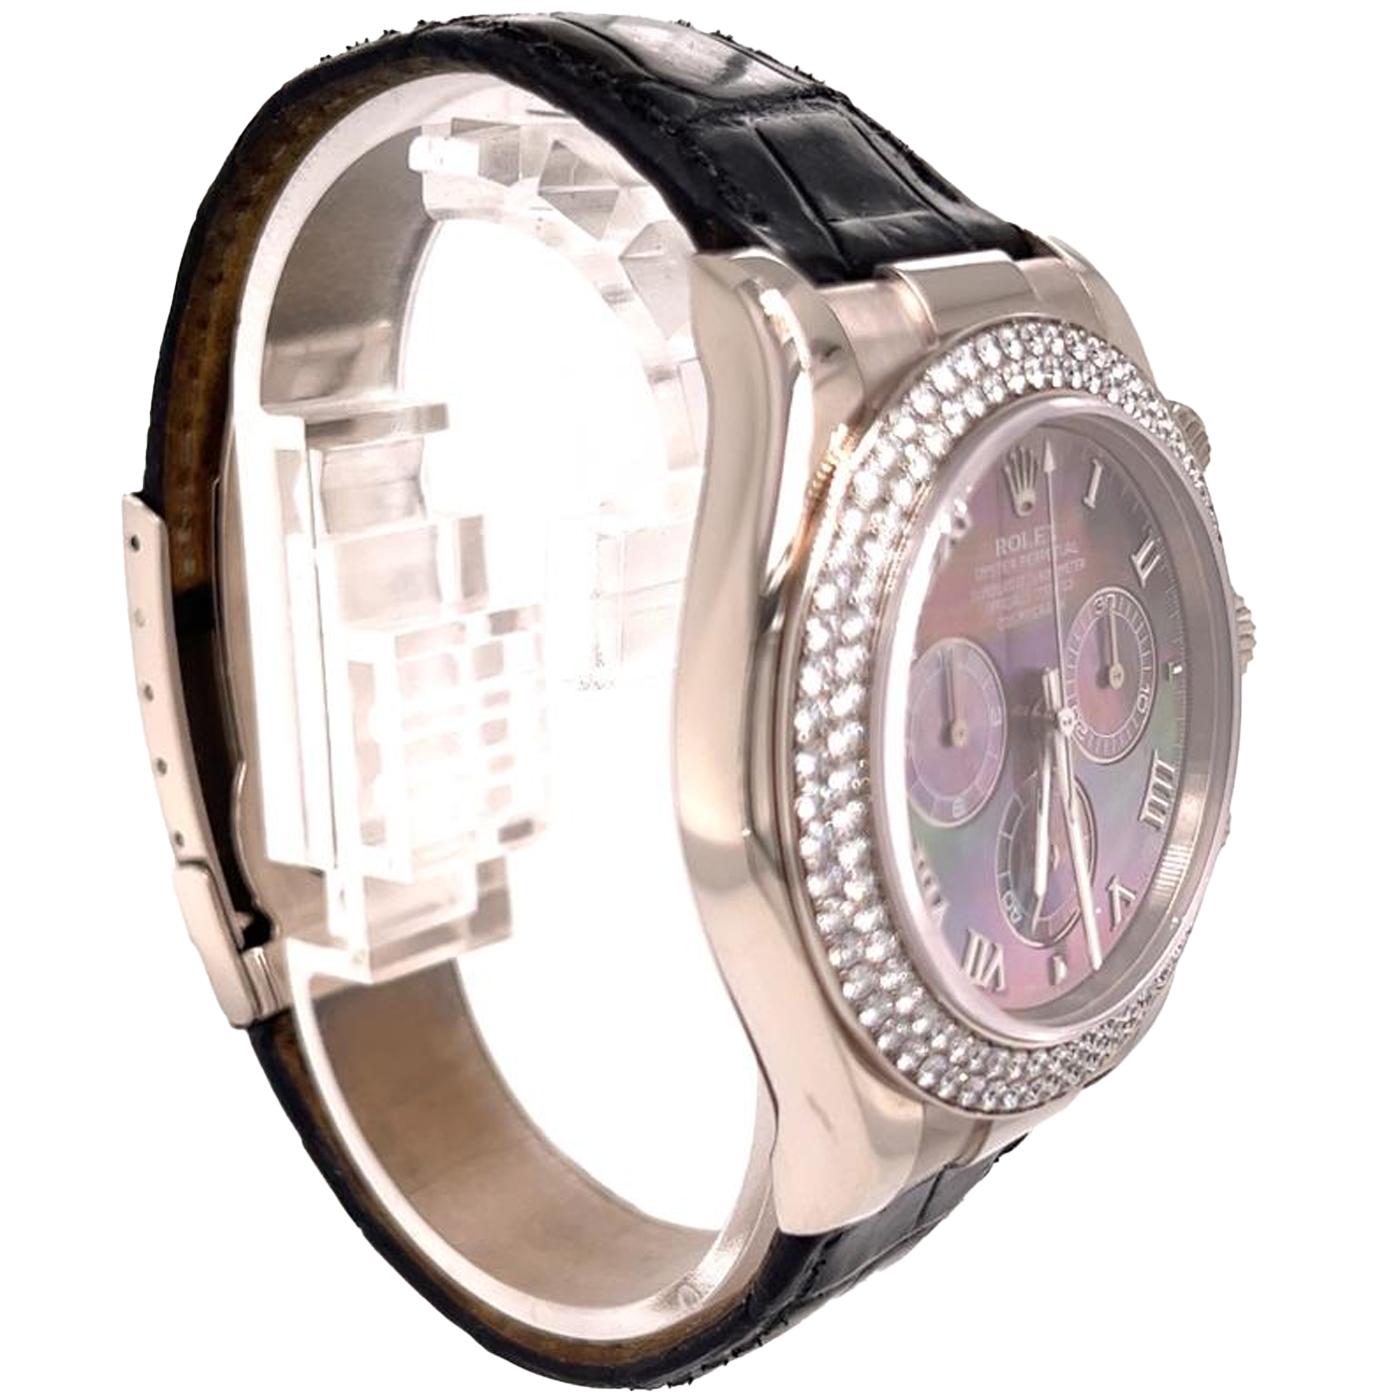 Modernist Rolex Daytona Cosmograph White Gold MOP Diamond Bezel Watch 116589RBR For Sale